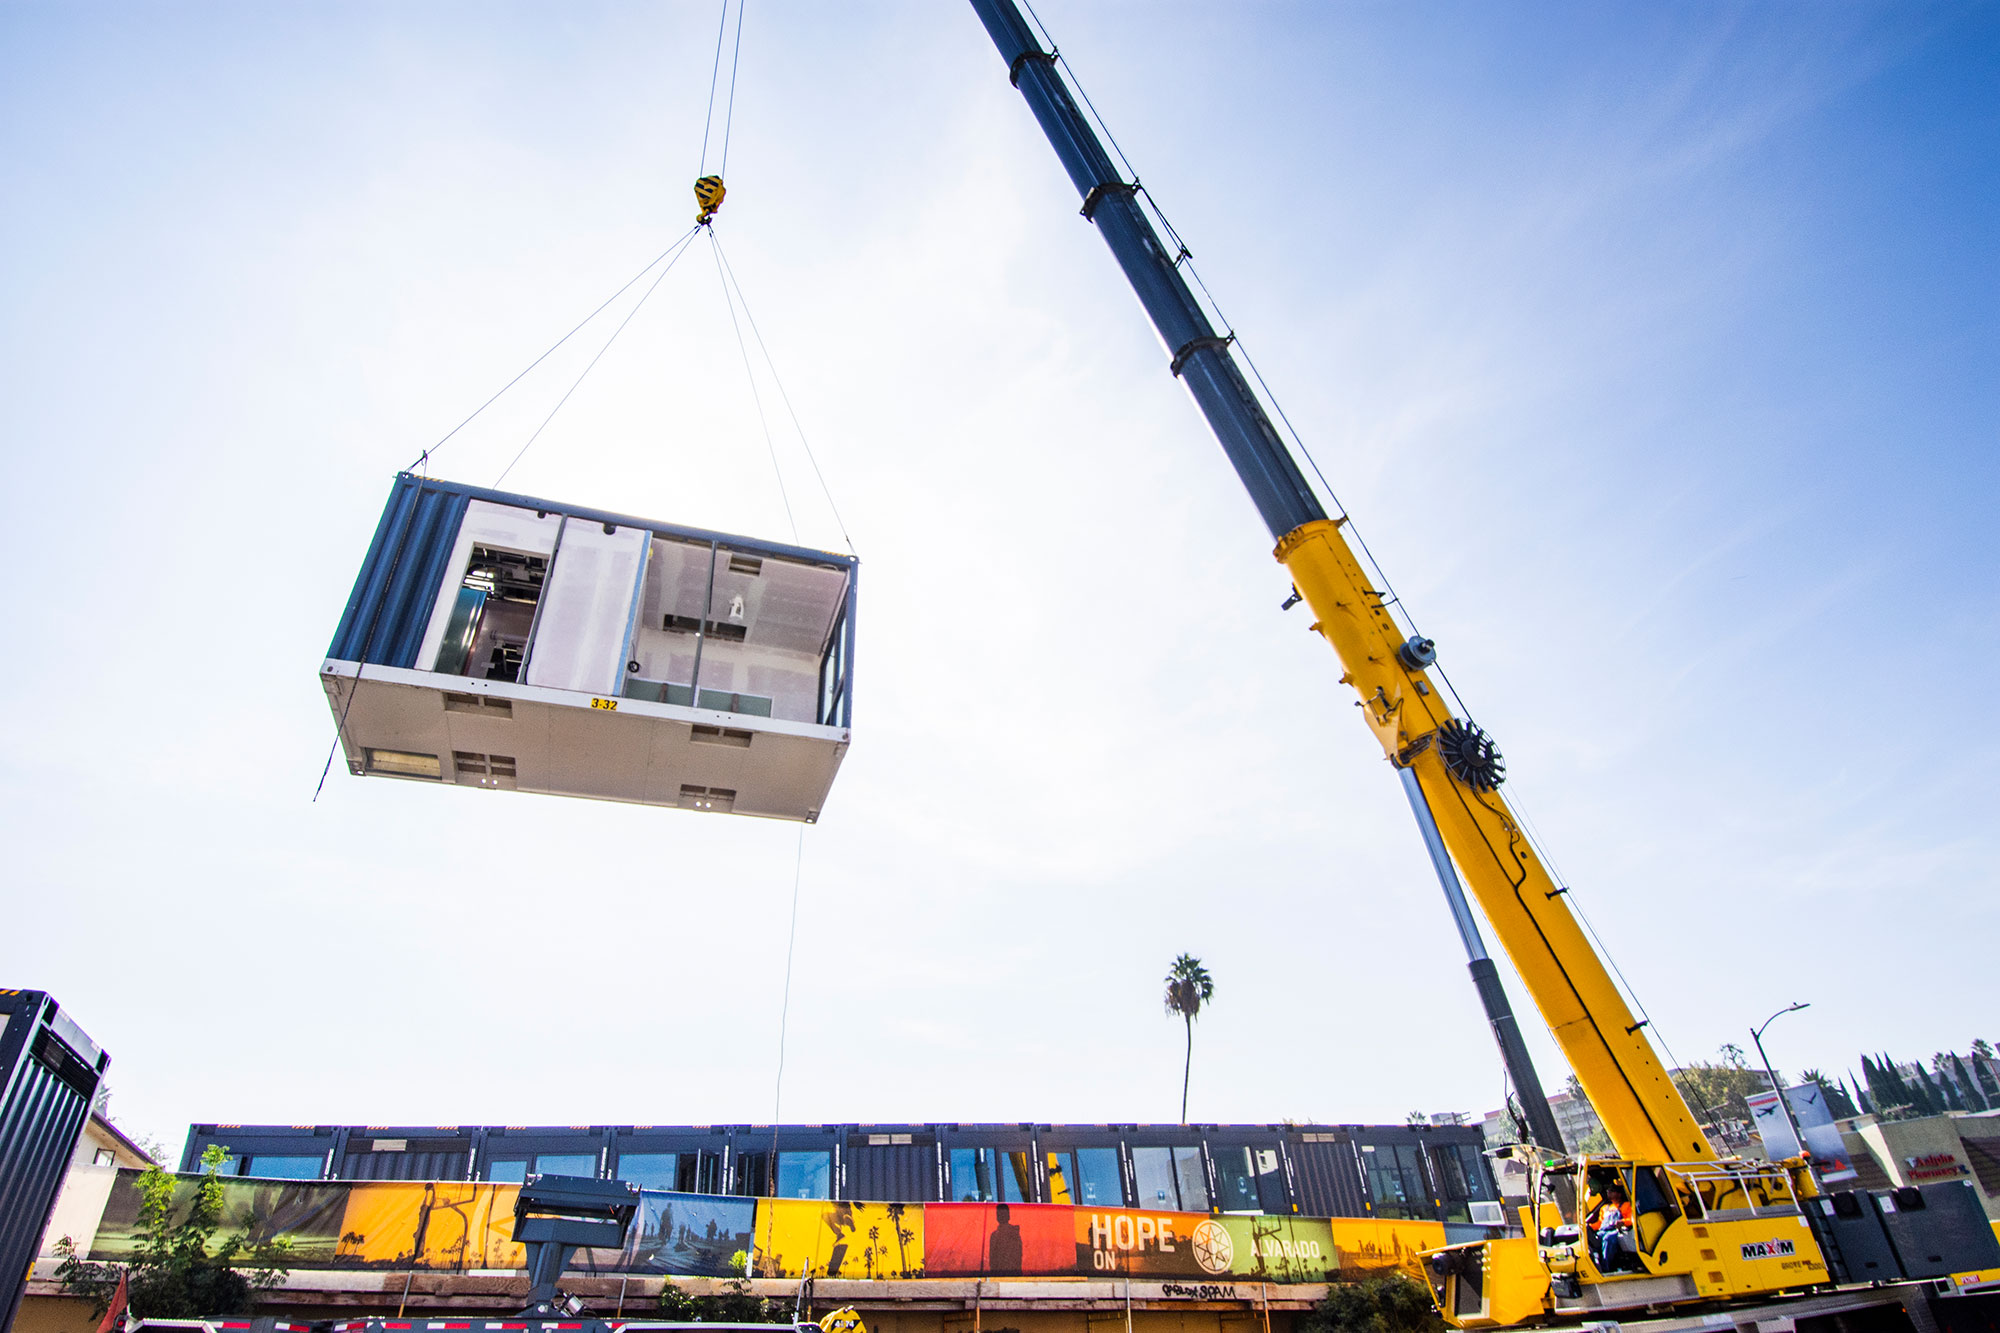 Crane Hoists a Quick Build Modular Housing Unit